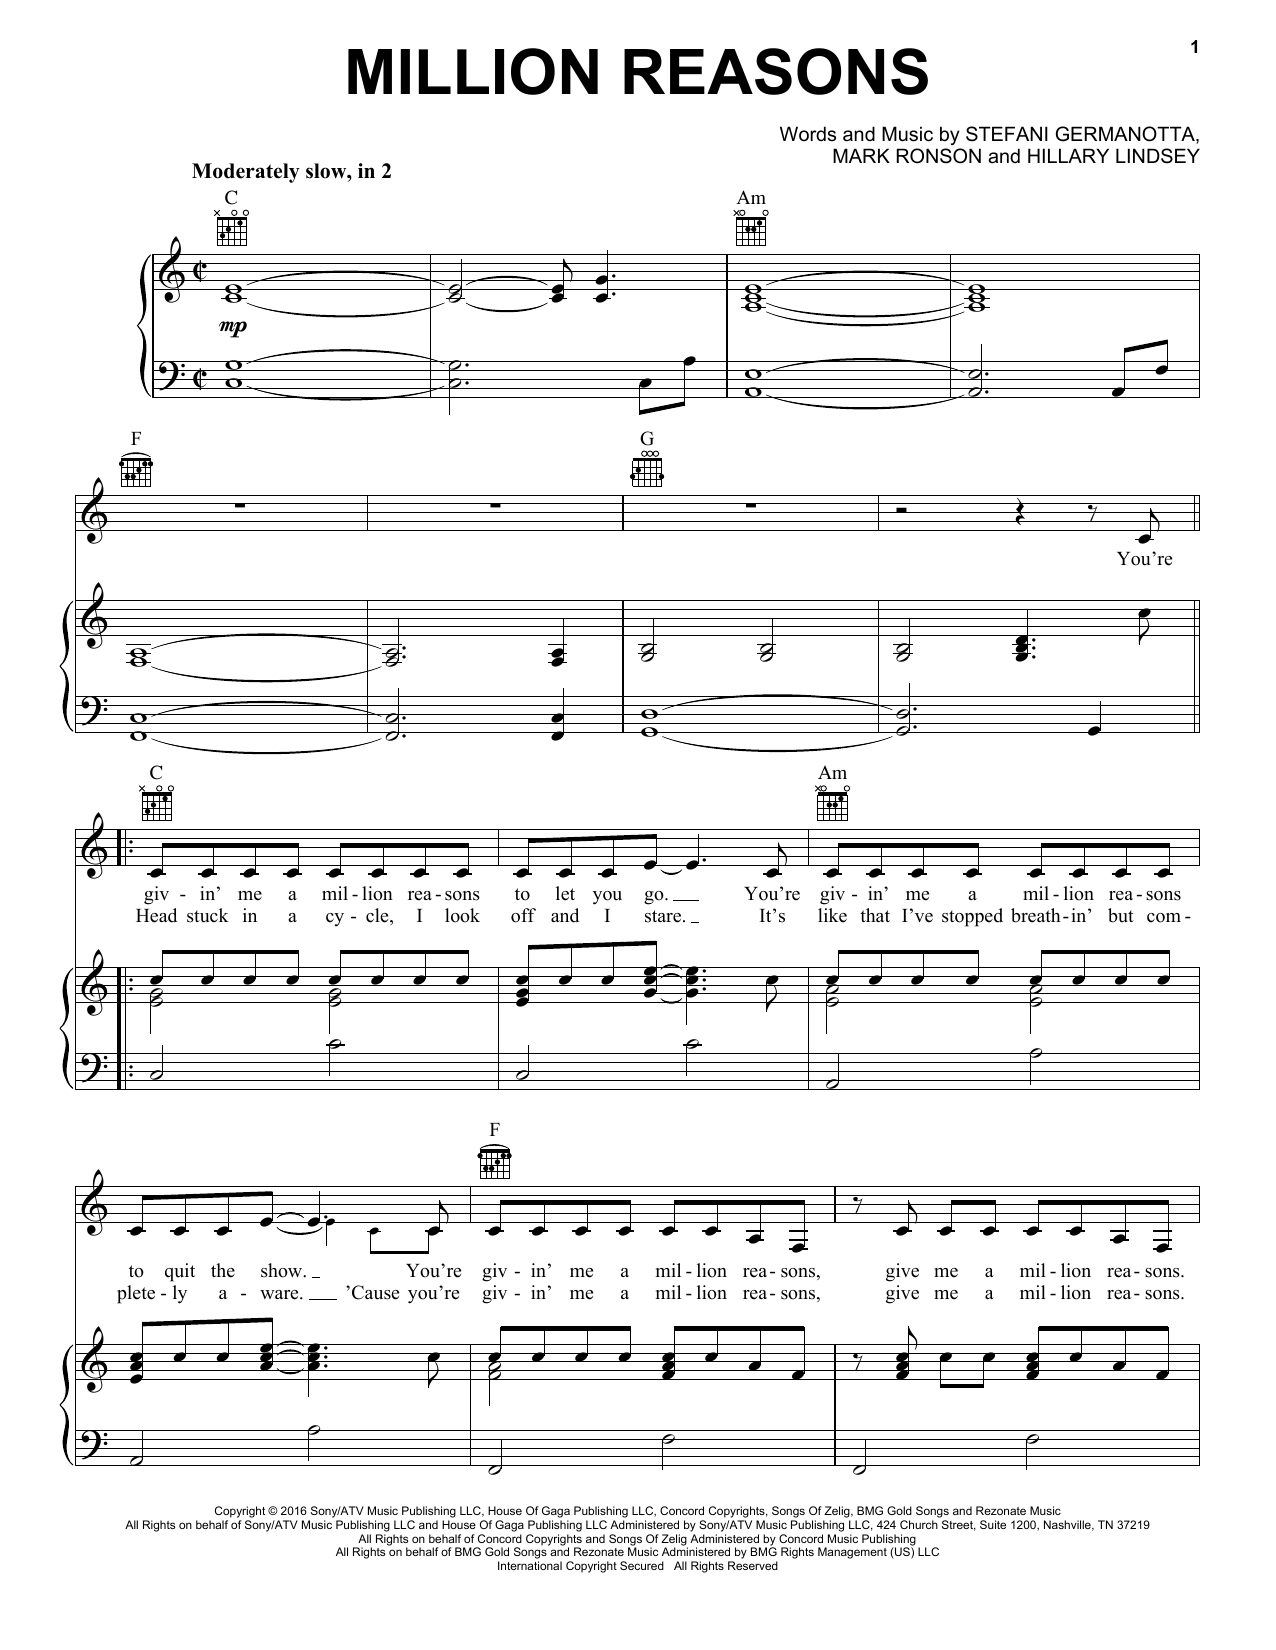 Lady Gaga Million Reasons Sheet Music Notes & Chords for Violin Duet - Download or Print PDF